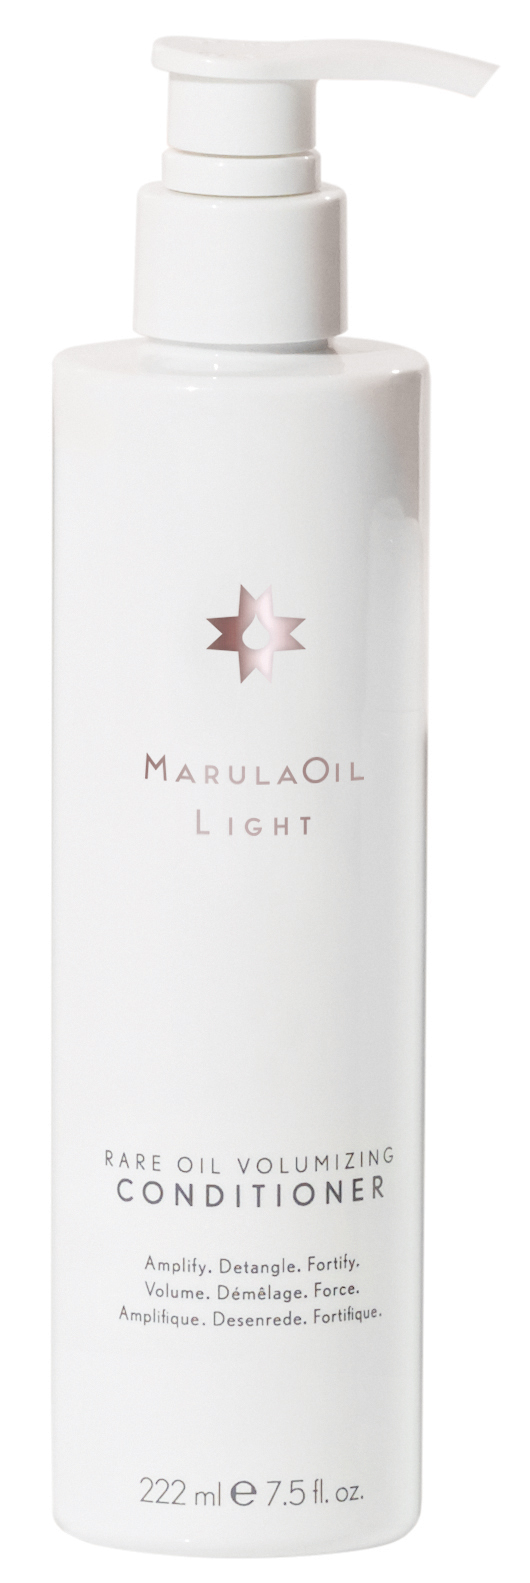 Paul Mitchell MarulaOil Light Rare Oil Volumizing Conditioner